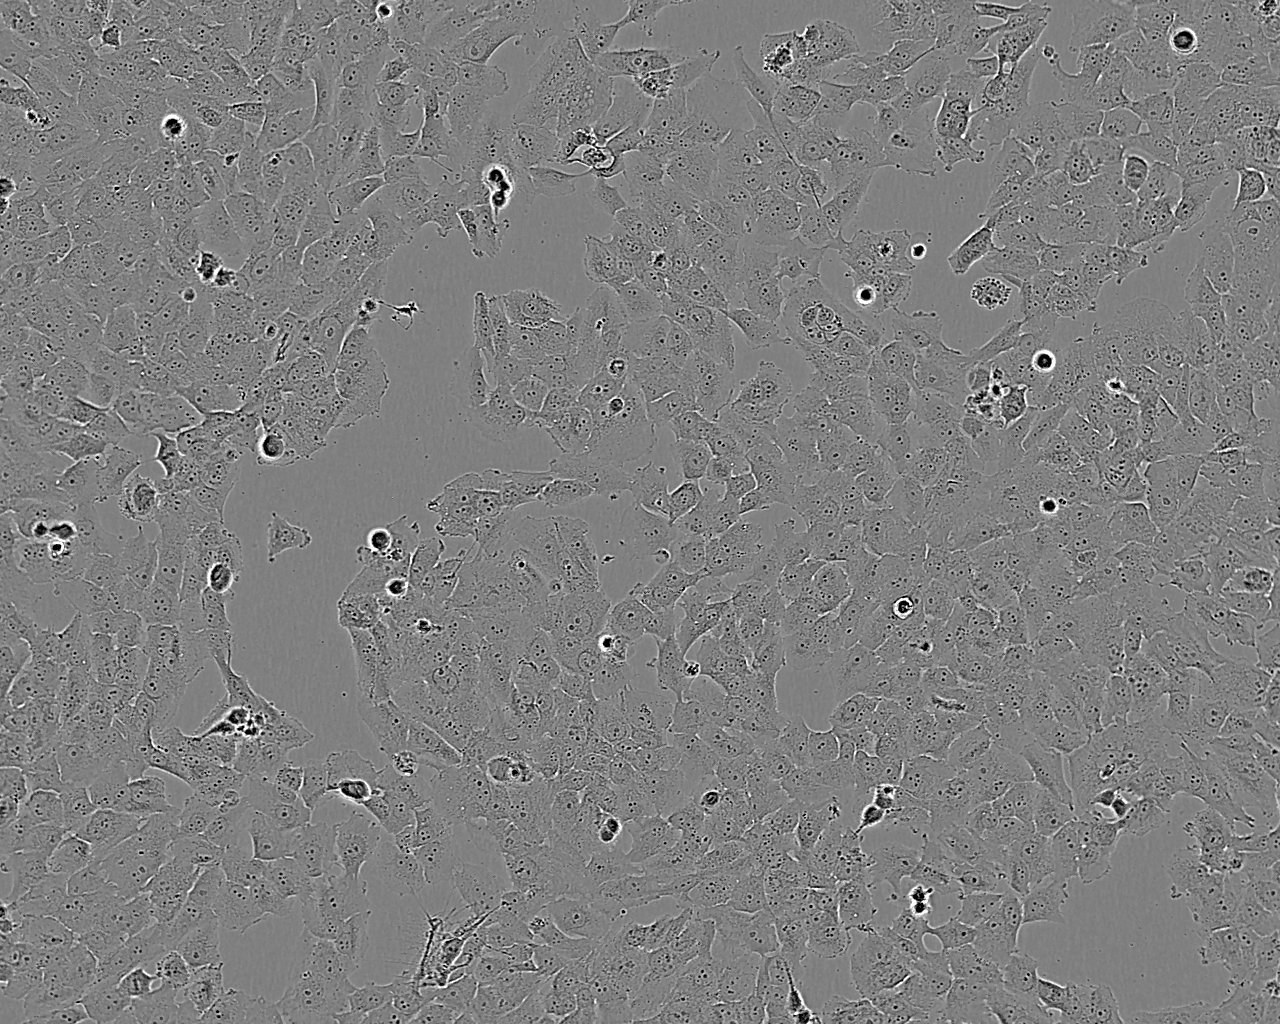 NCI-H1666 Cell:人肺支气管癌细胞系,NCI-H1666 Cell